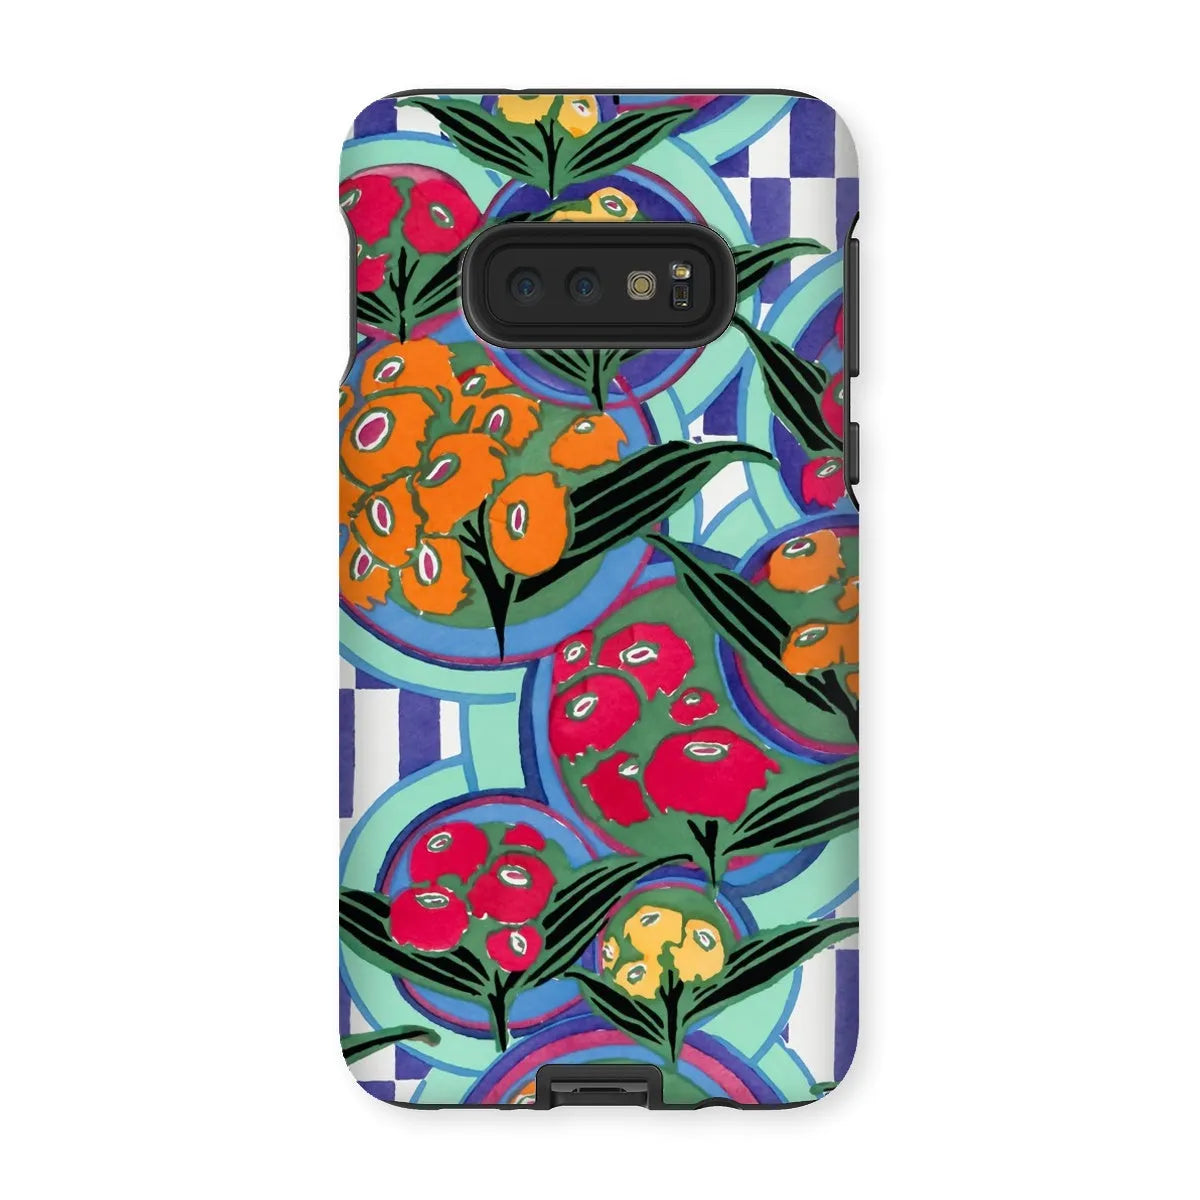 Vibrant Floral Aesthetic Art Phone Case - E.a. Séguy - Samsung Galaxy S10e / Matte - Mobile Phone Cases - Aesthetic Art